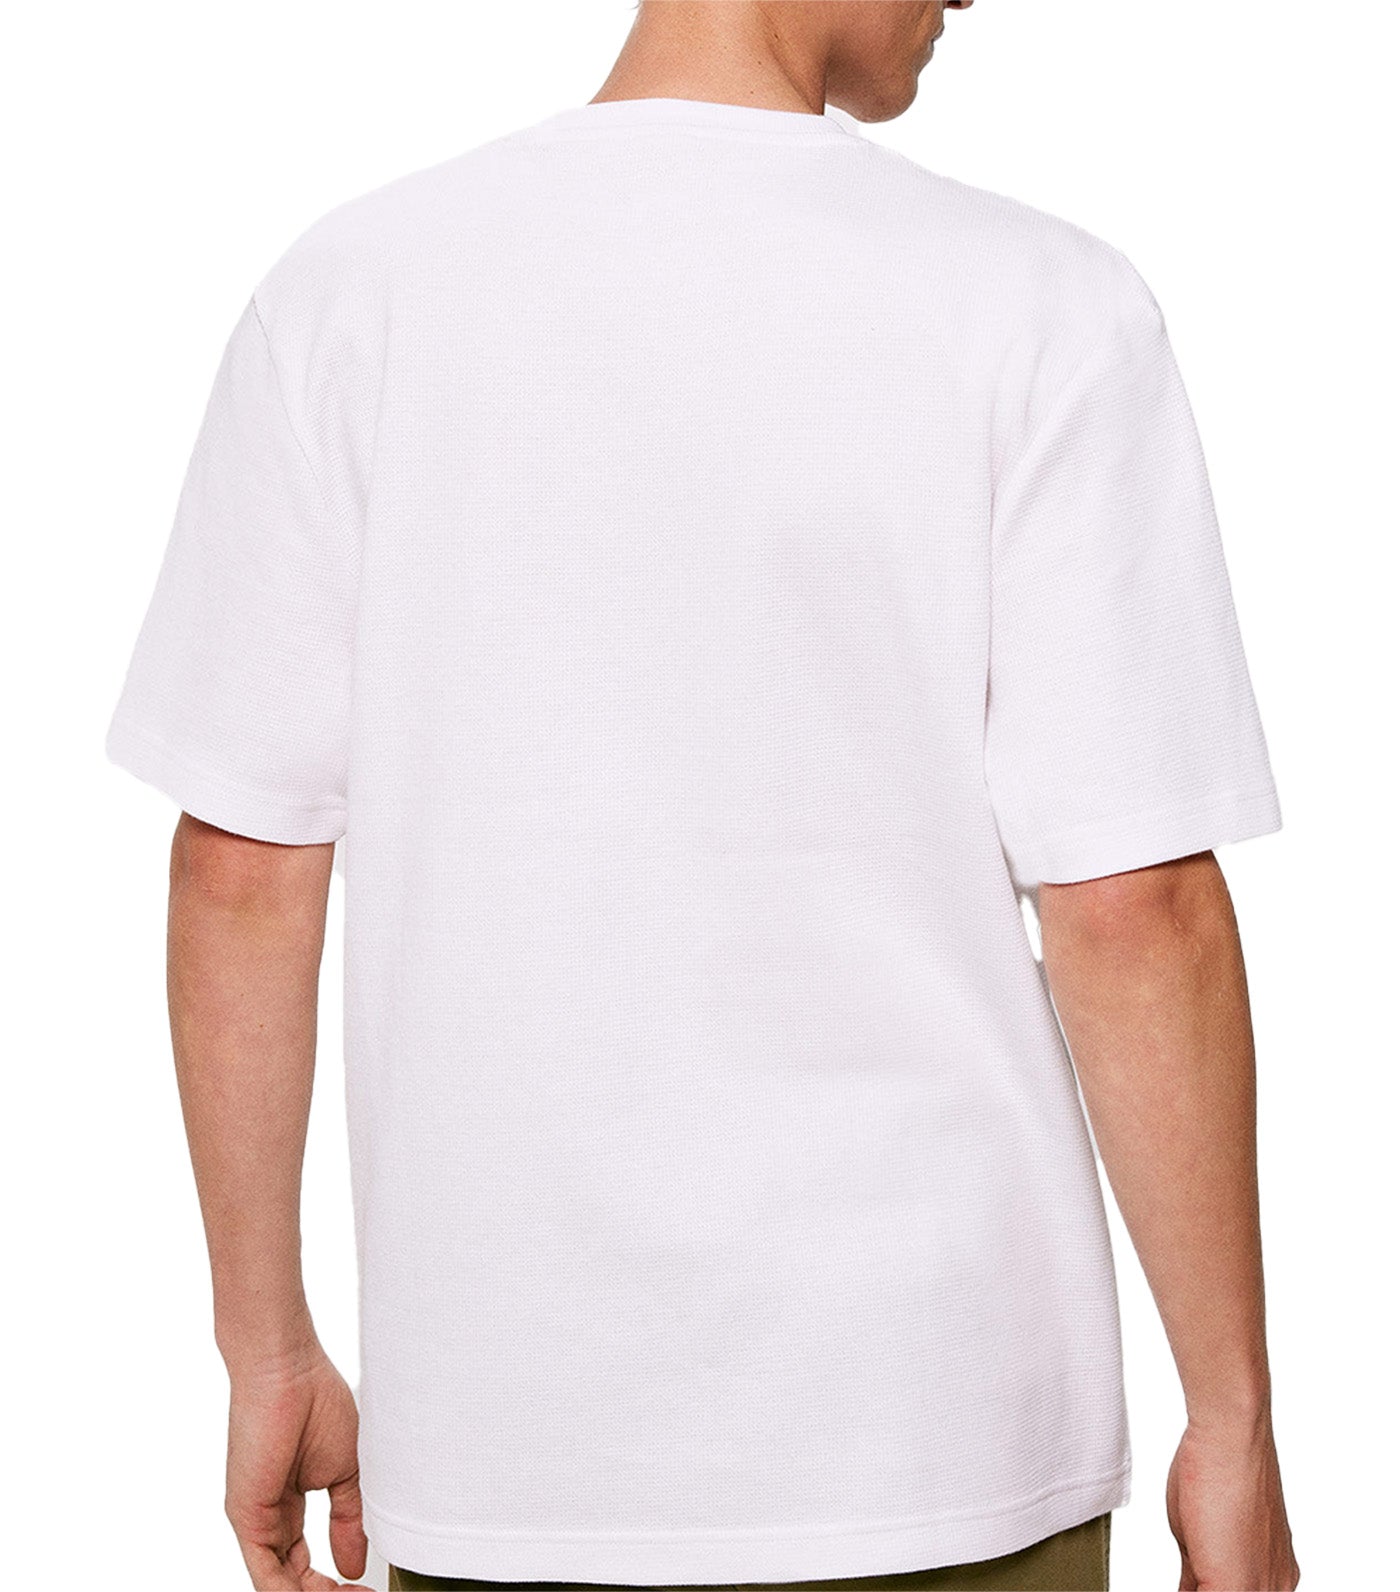 Run Or Burn T-Shirt White